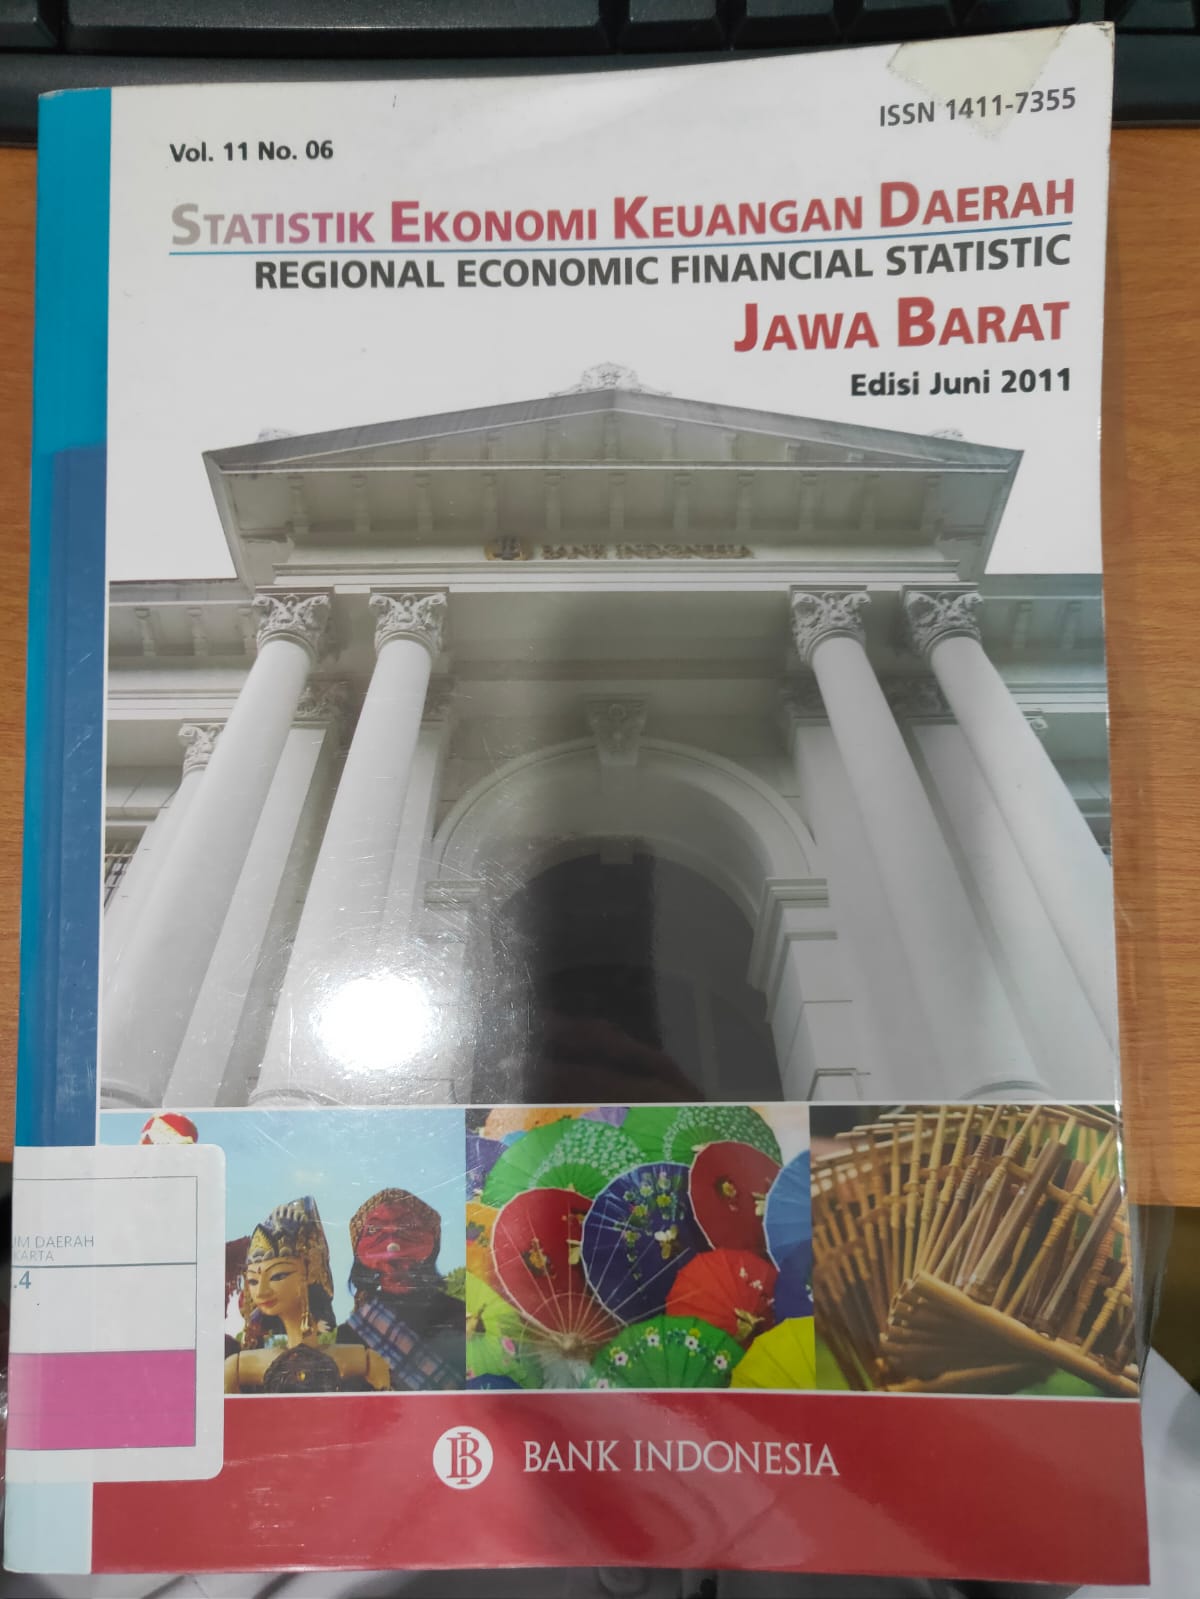 Statistik Ekonomi Keuangan Daerah Jawa Barat Vol 11 No, 06 edisi Juni 2011 :  Regional Economic Financial Statistic